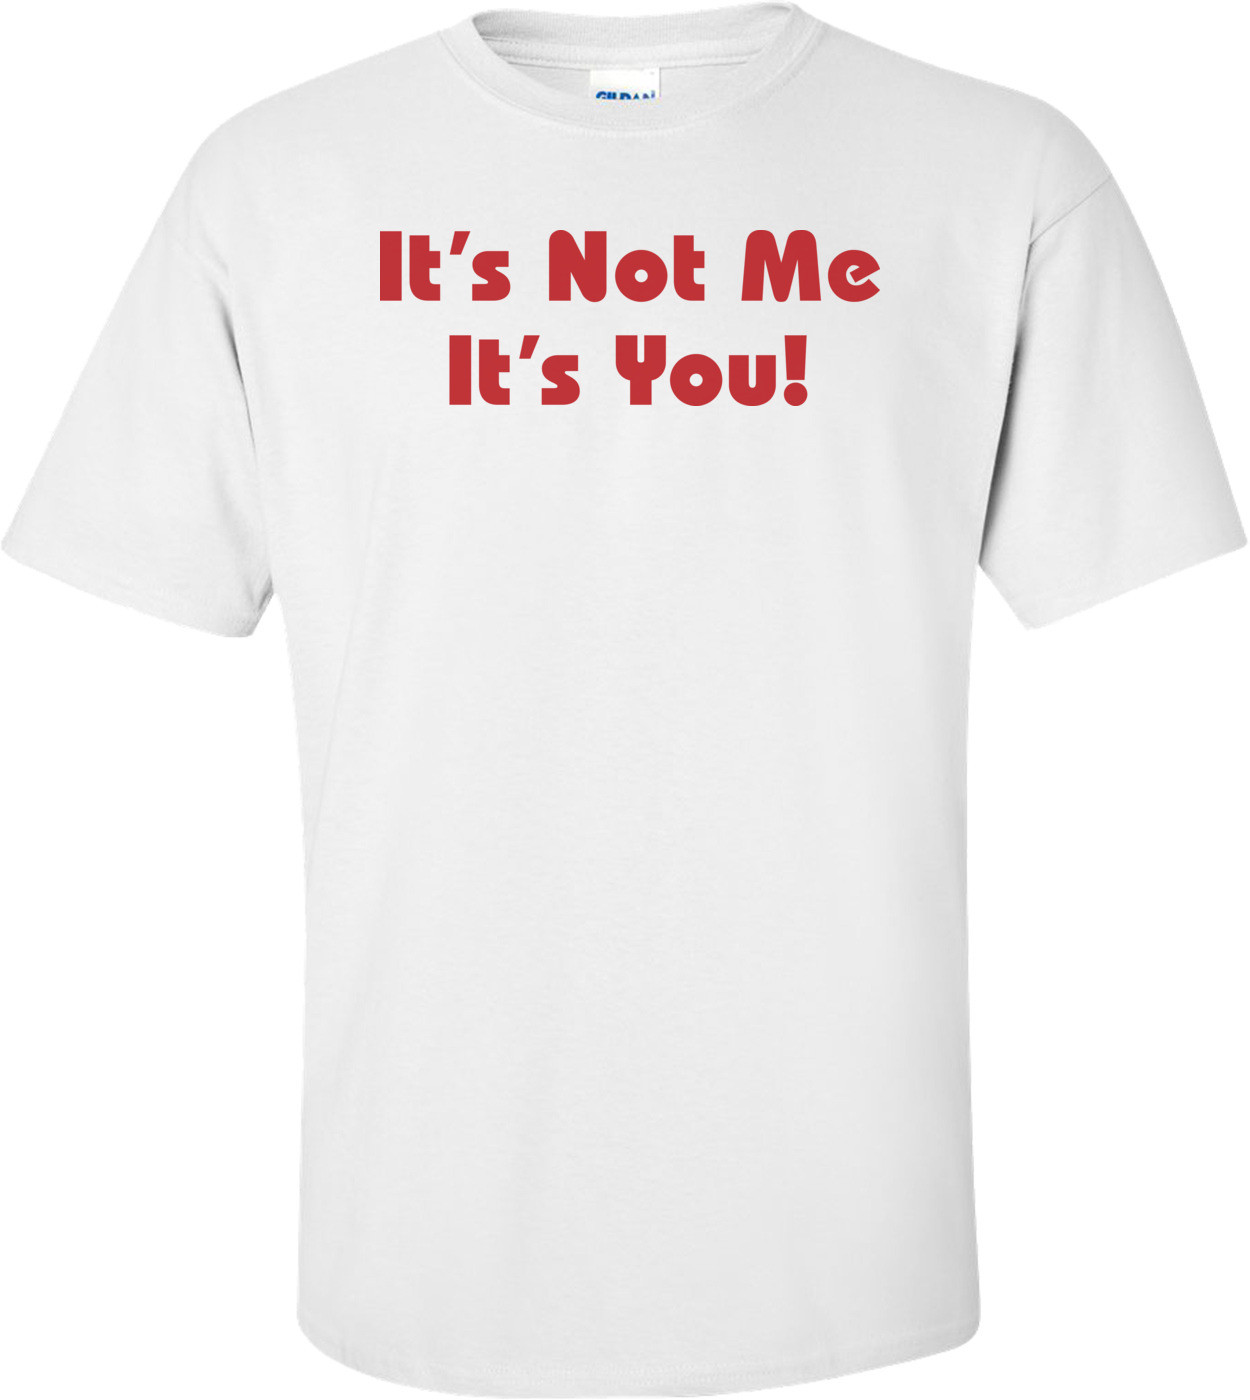 It's Not Me It's You T-shirt 